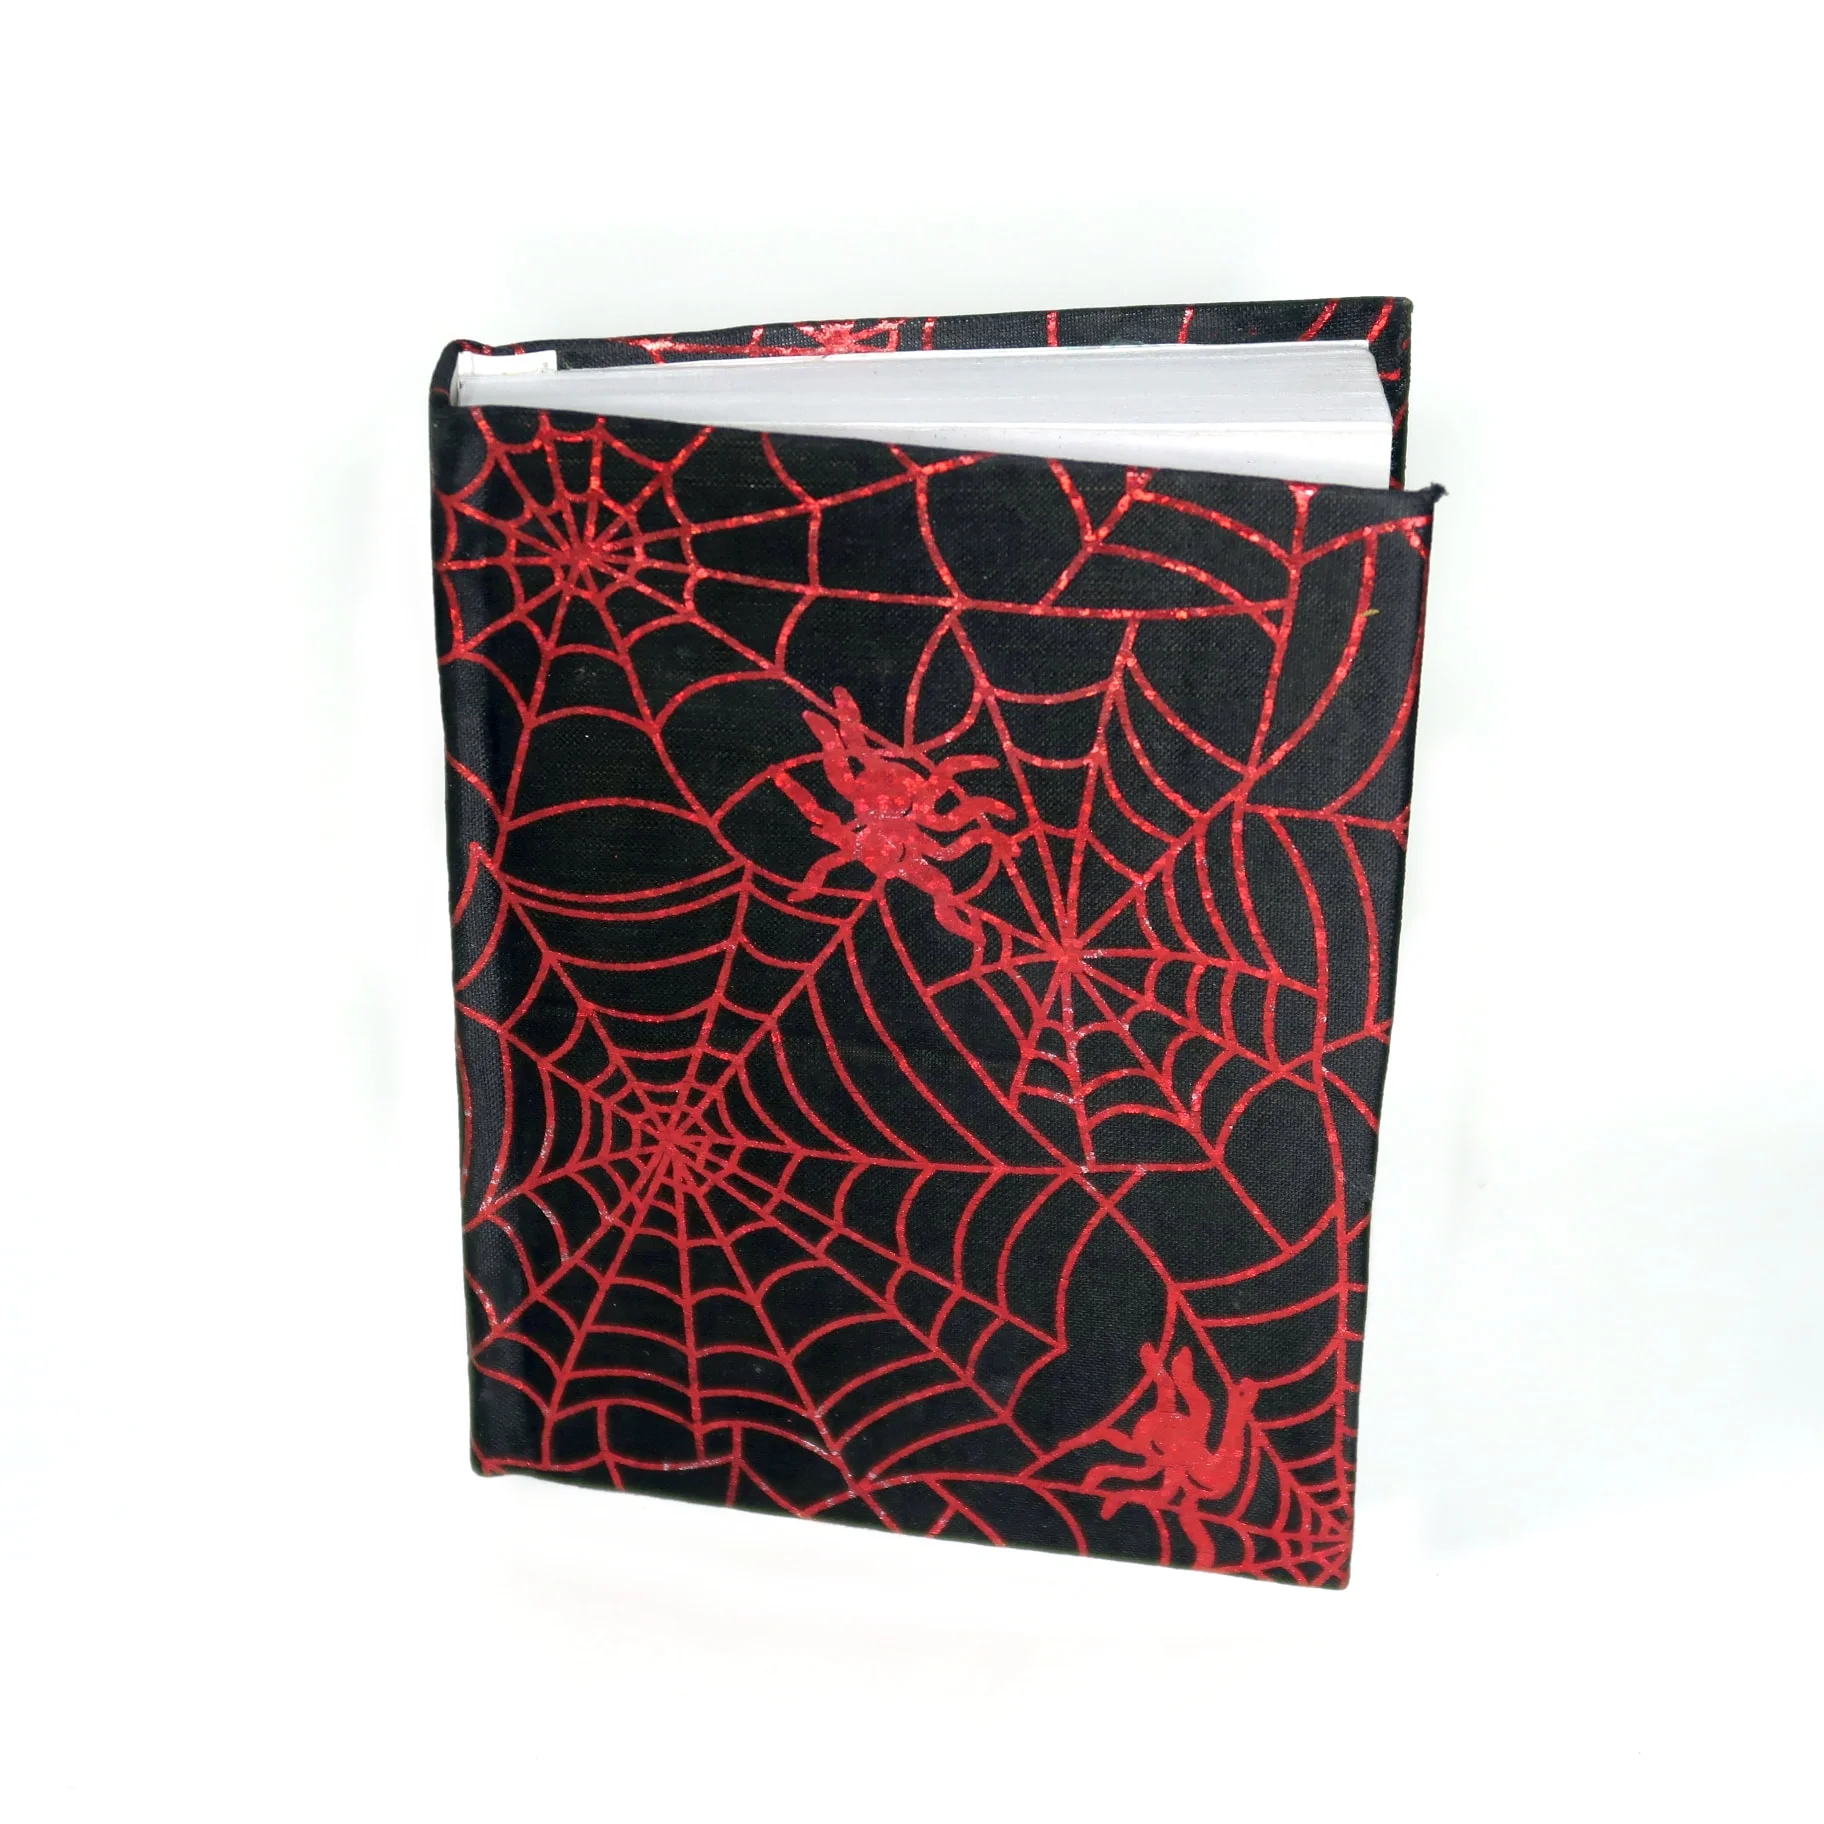 Shiny Red Spiderweb Fabric Hardcover Journal  - $22.00